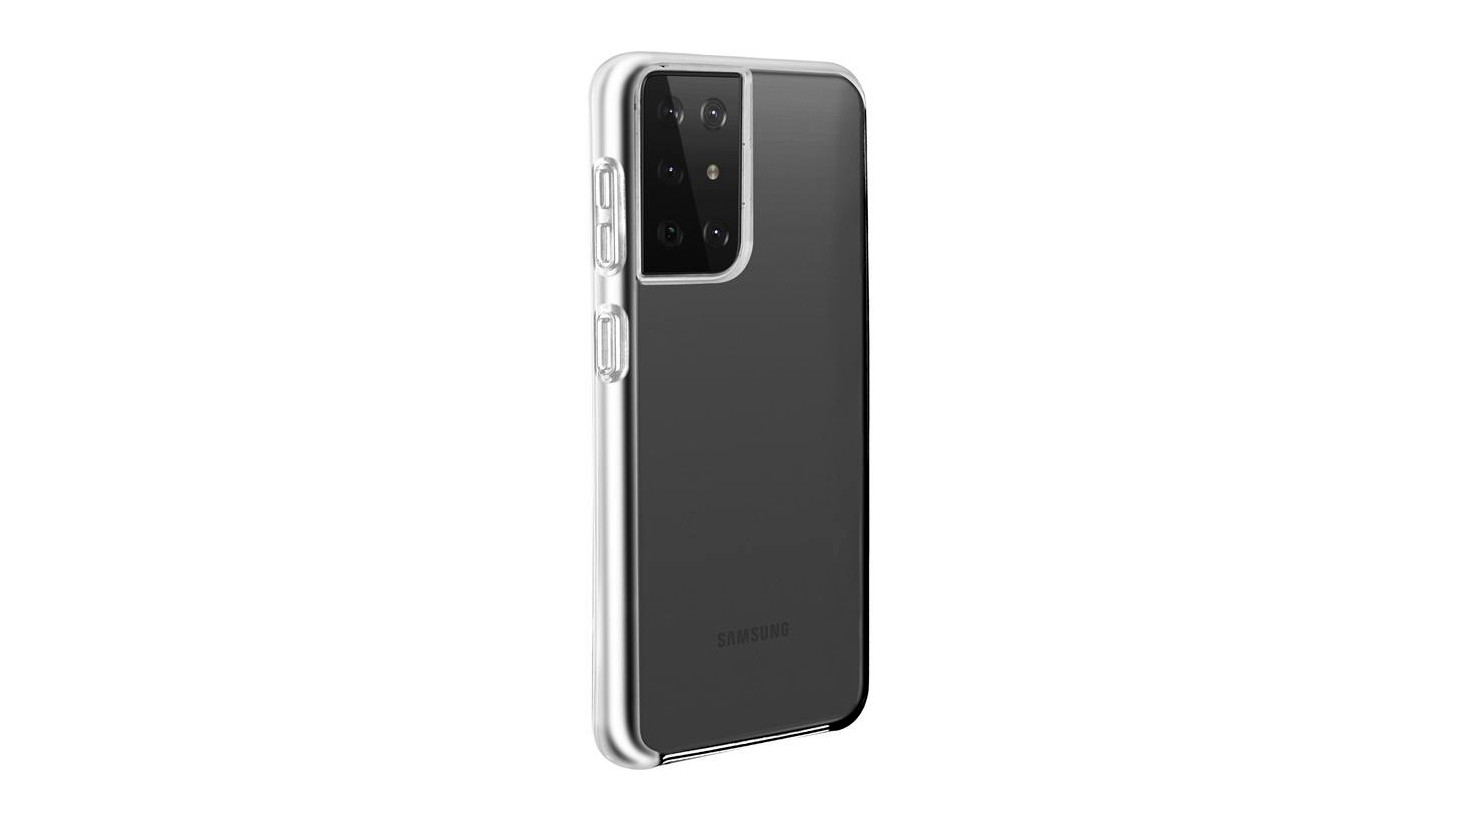 Spigen Crystal Hybrid Samsung G998 Galaxy S21 Ultra 